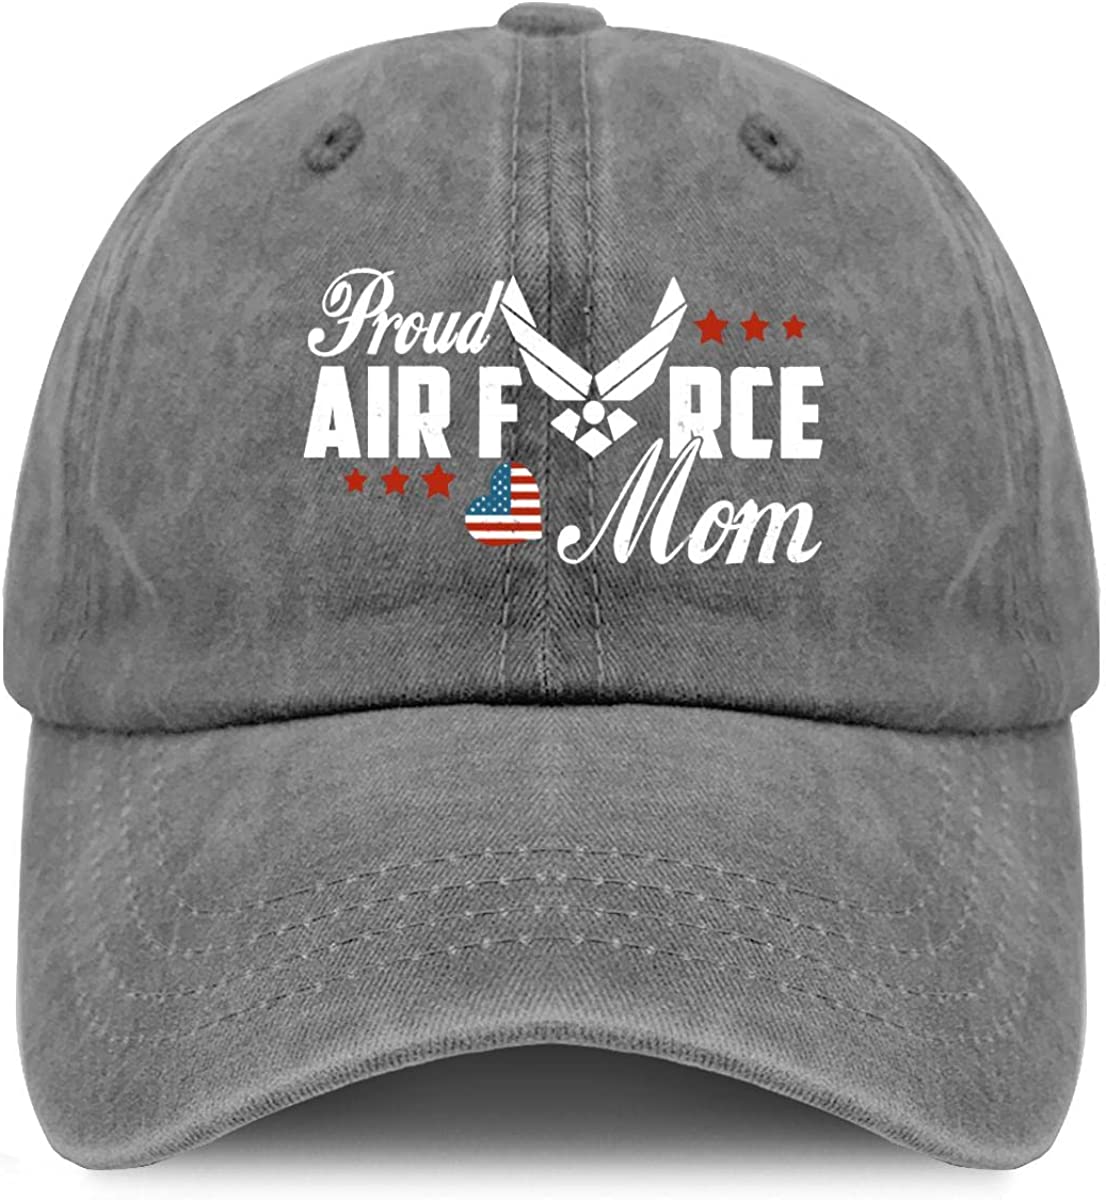 Baseball Cap for Men Fashion caps Mens Flexfit Proud Mom Air Force